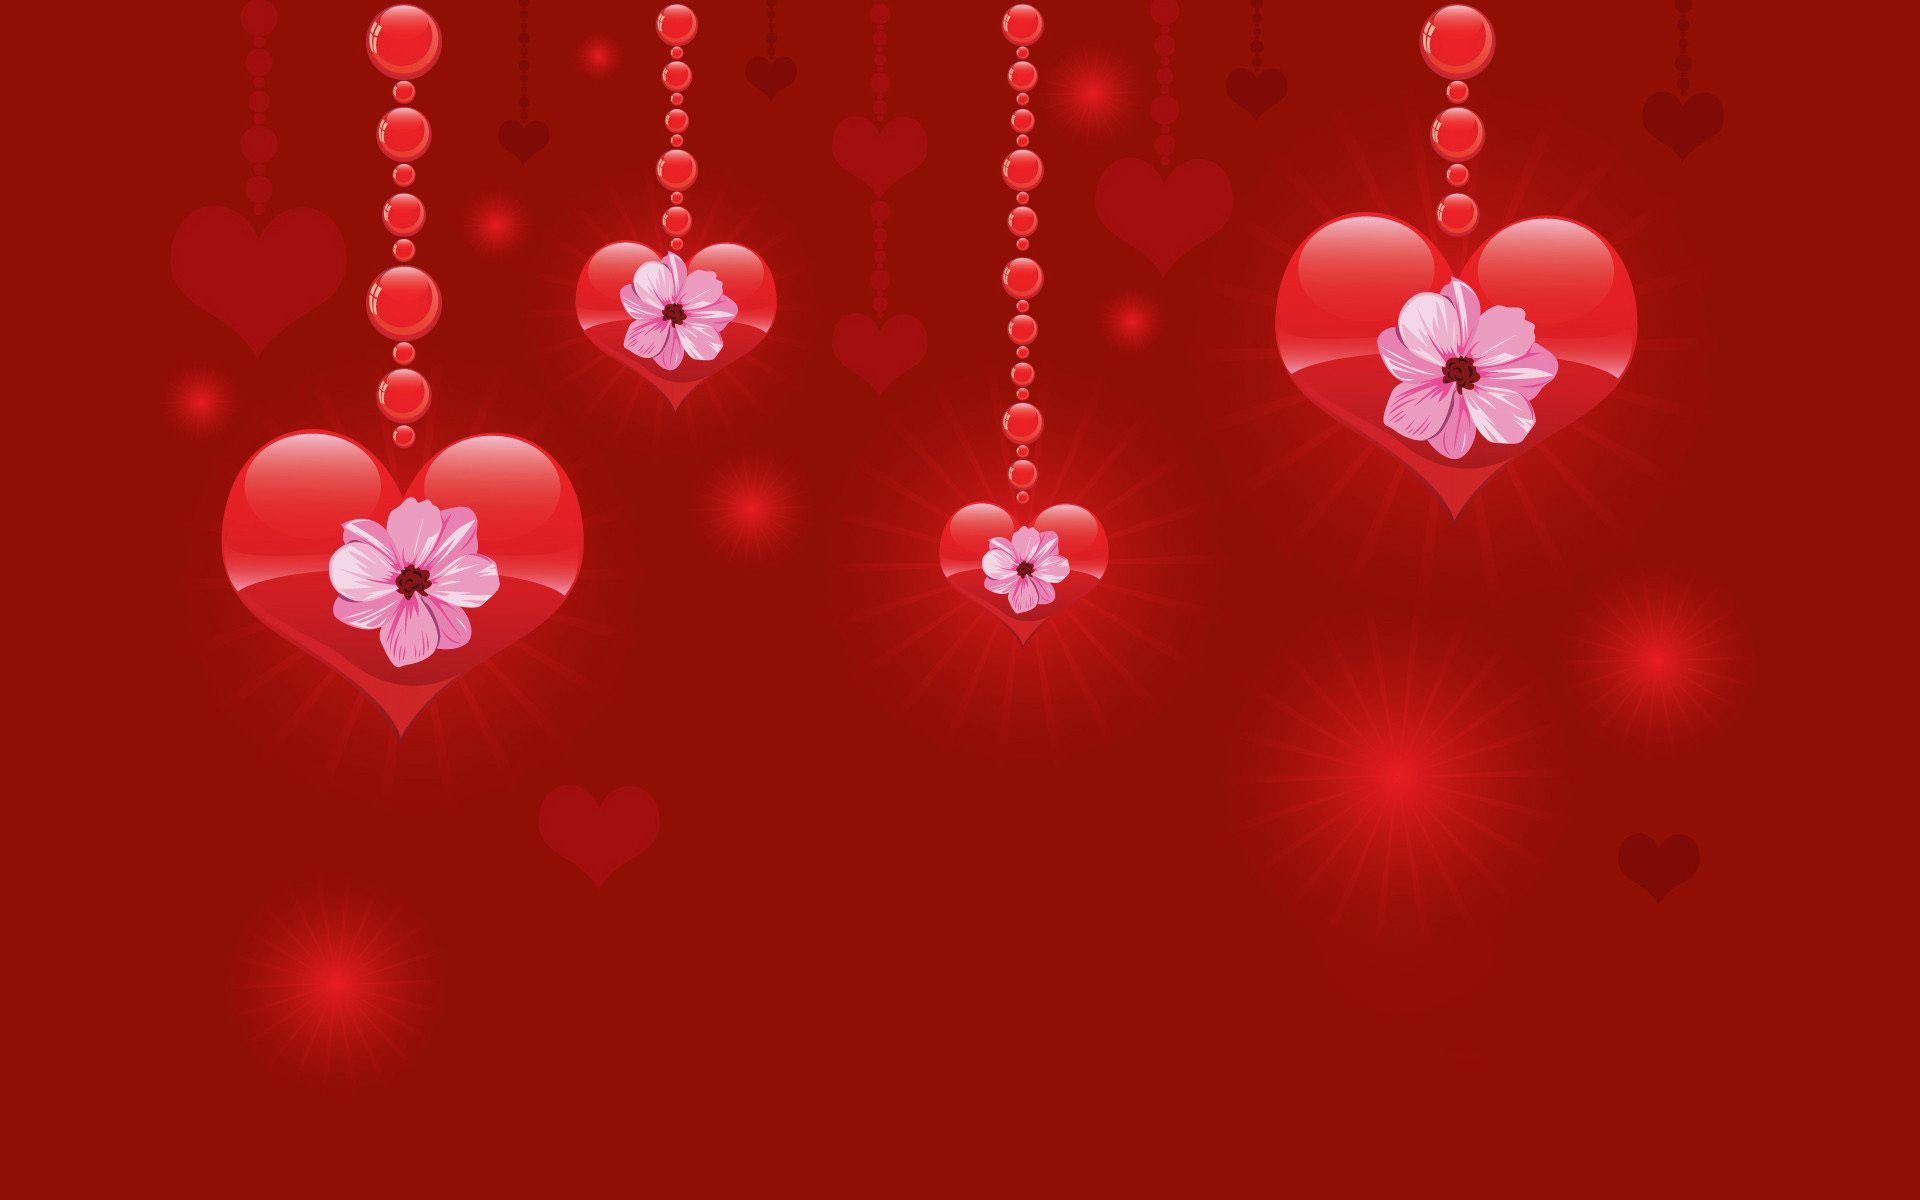 Valentines Day Wallpapers Free HD Download 500 HQ  Unsplash